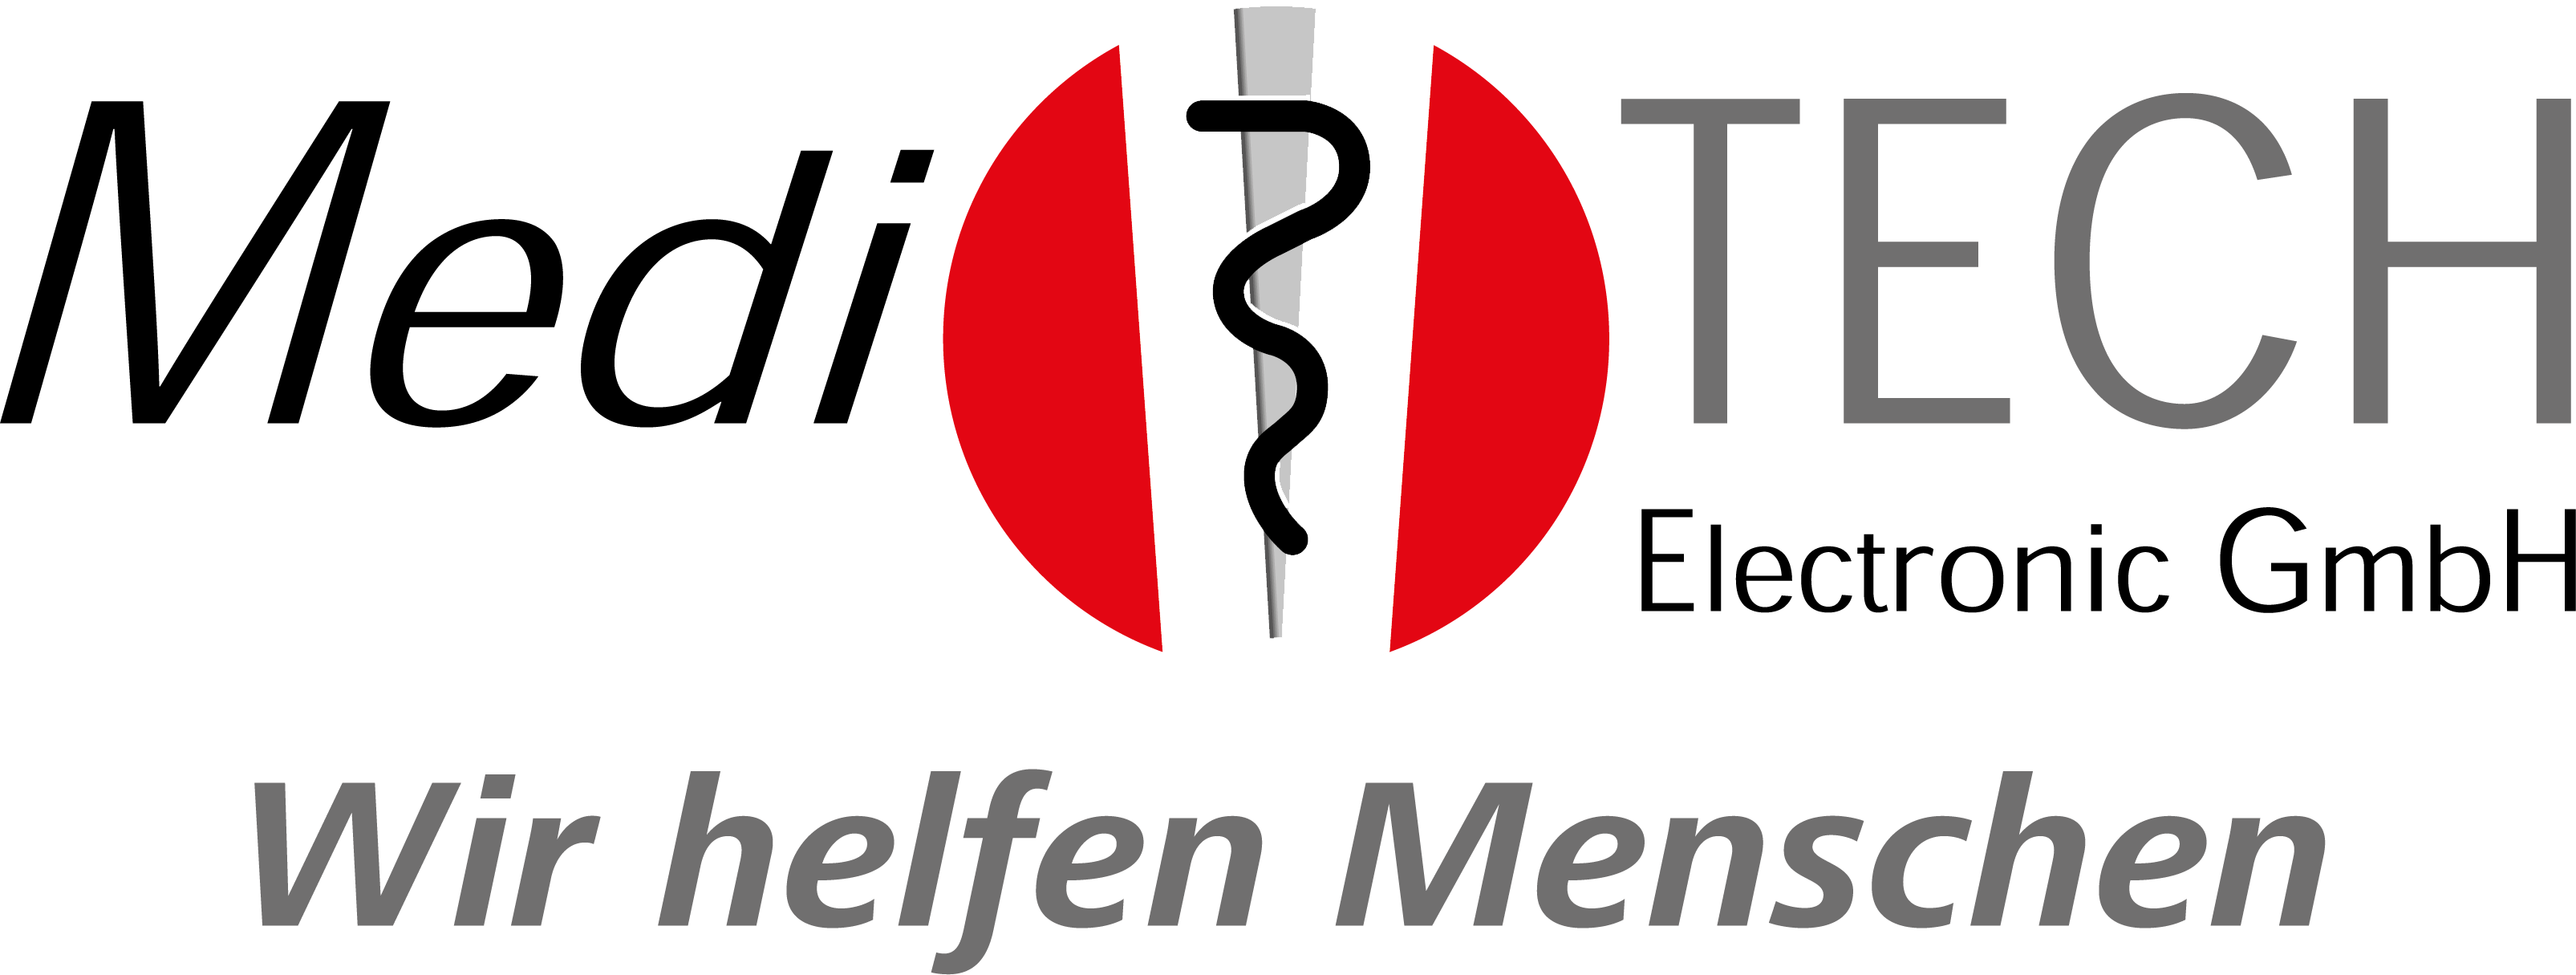 MediTECH Electronic GmbH